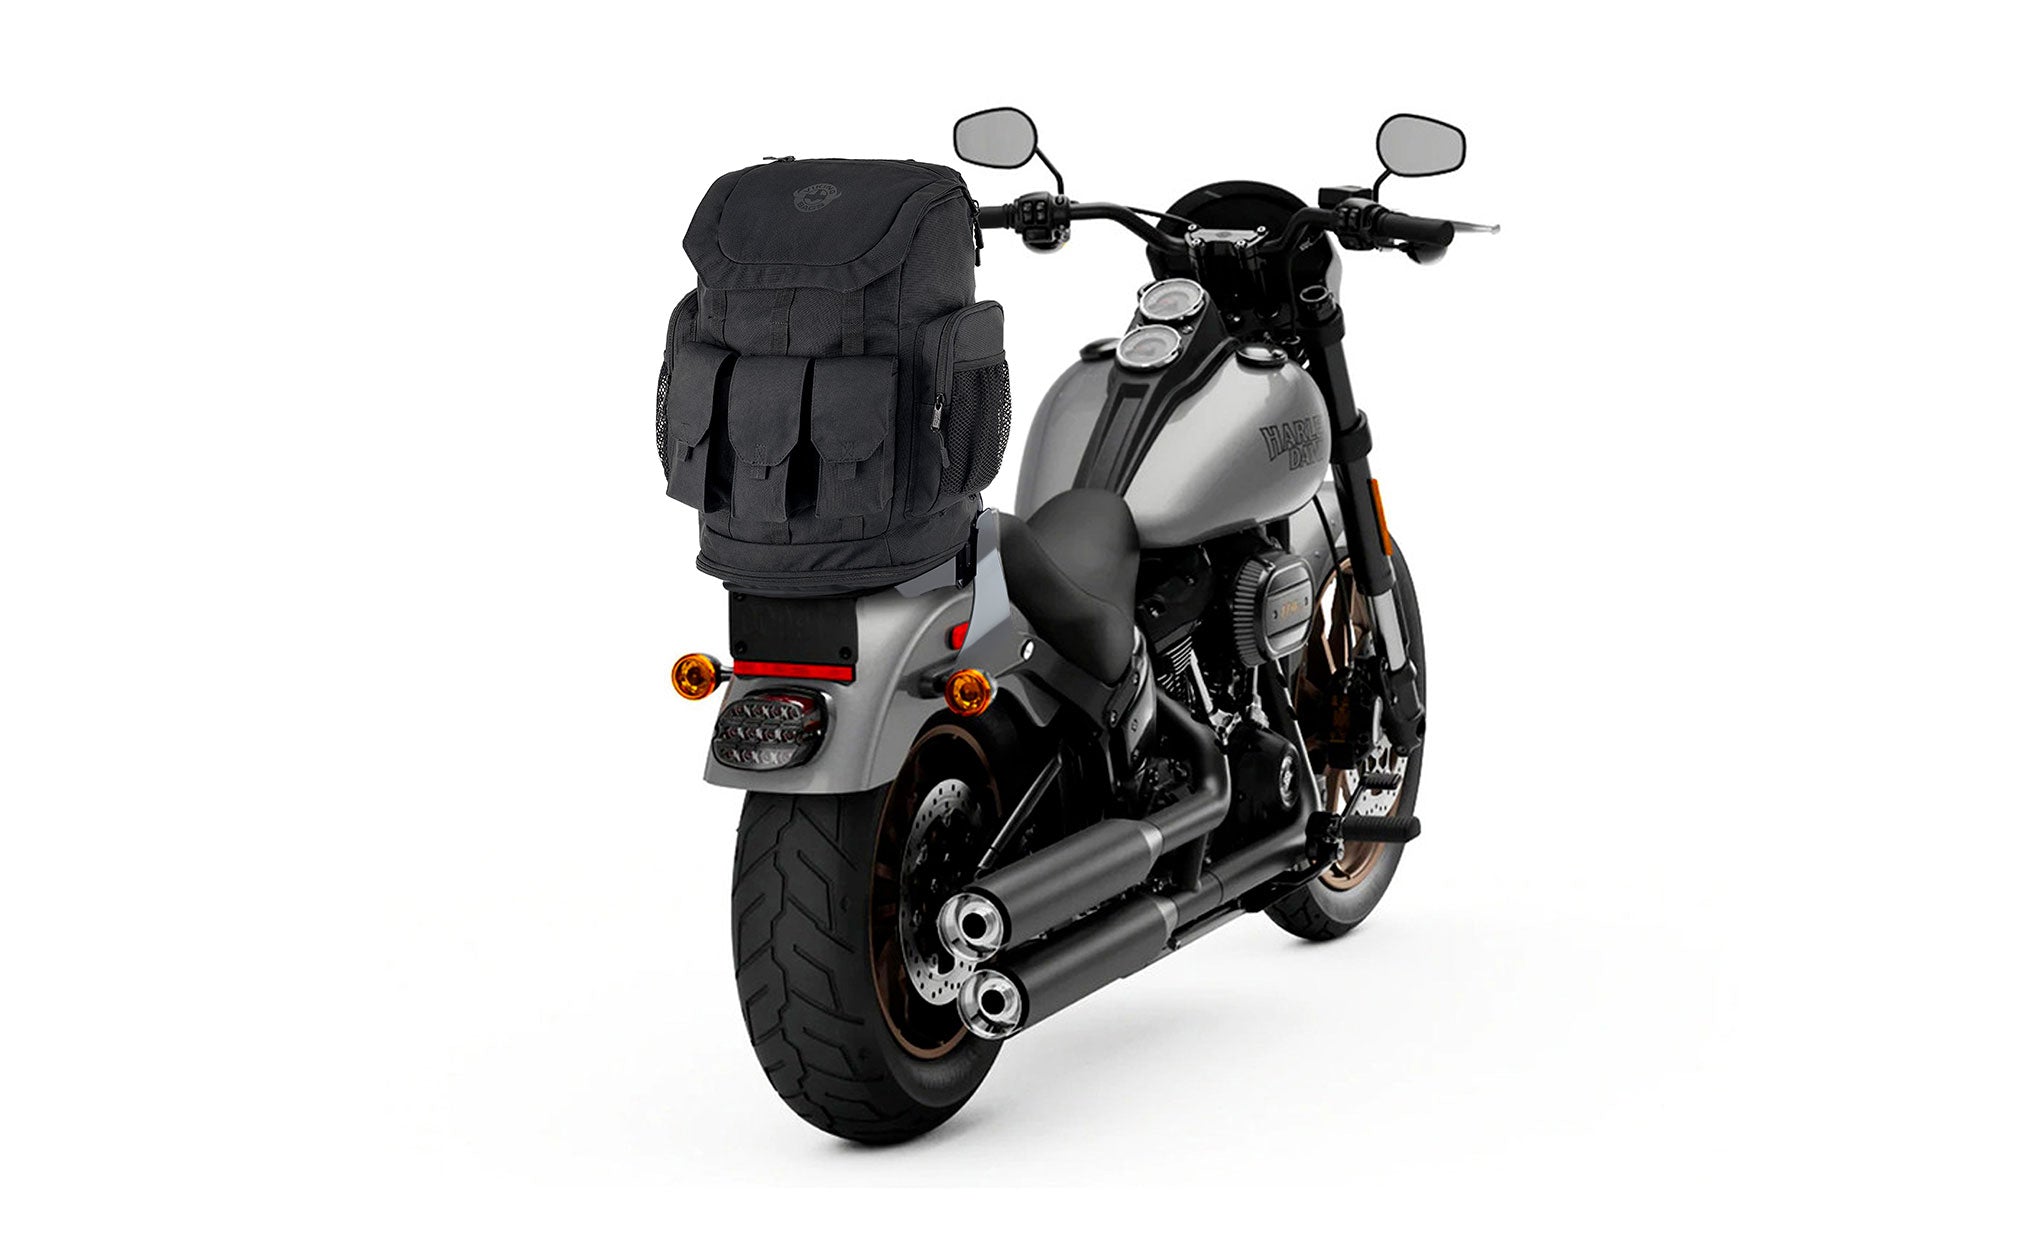 Viking Trident XL Honda Motorcycle Tail Bag Bag on Bike View @expand